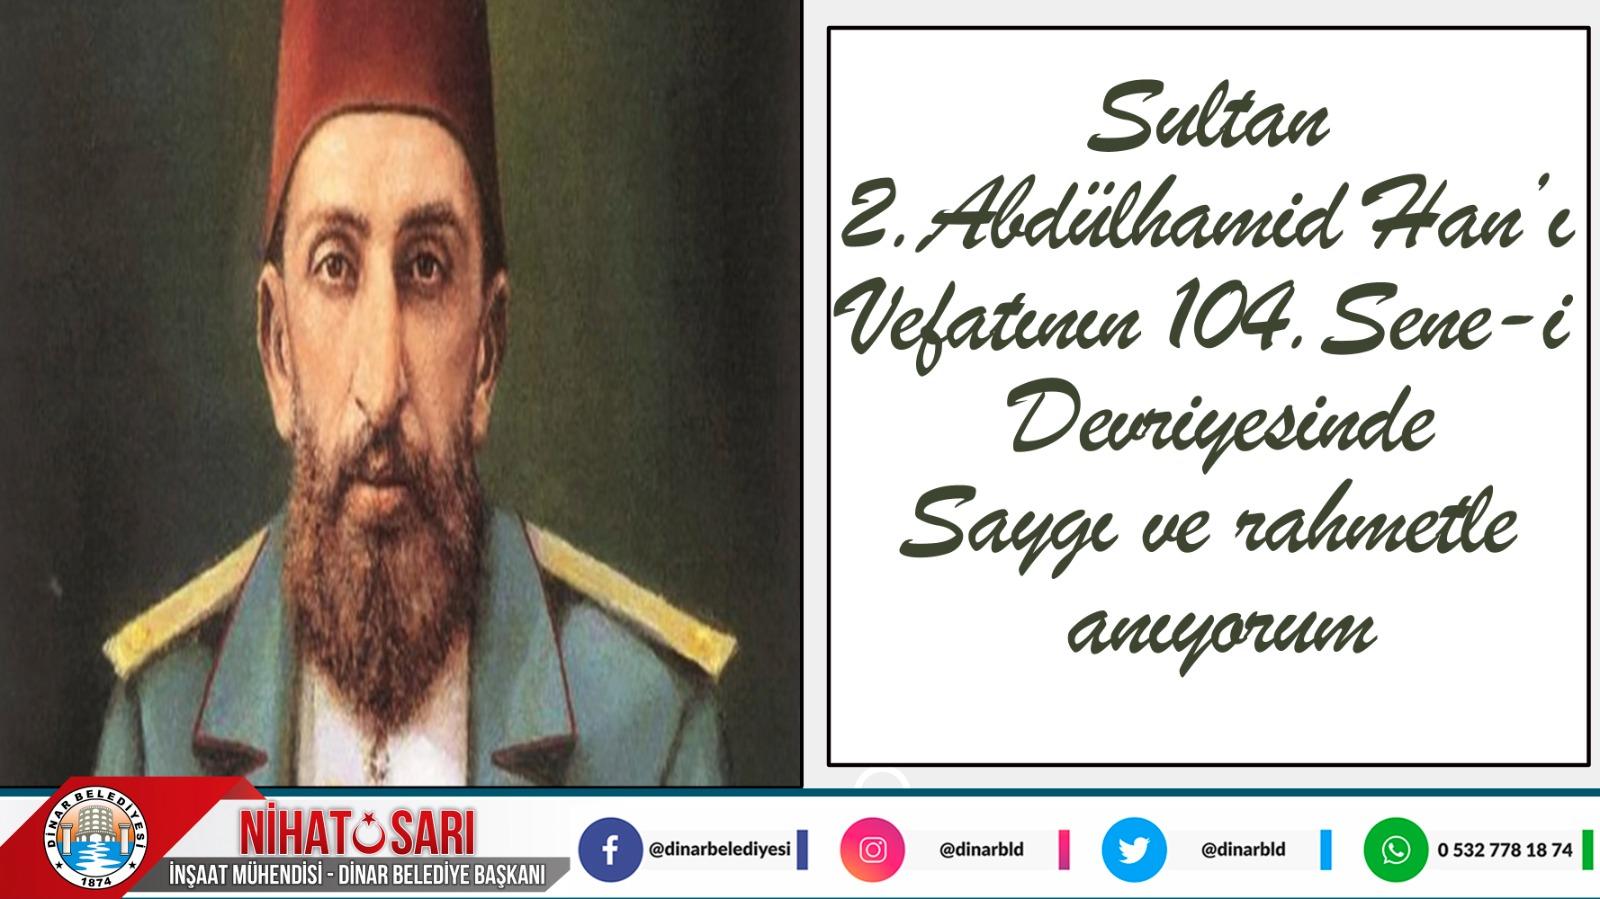 Başkan Sarı’dan Sultan II. Abdülhamid Han’ı Anma Mesajı